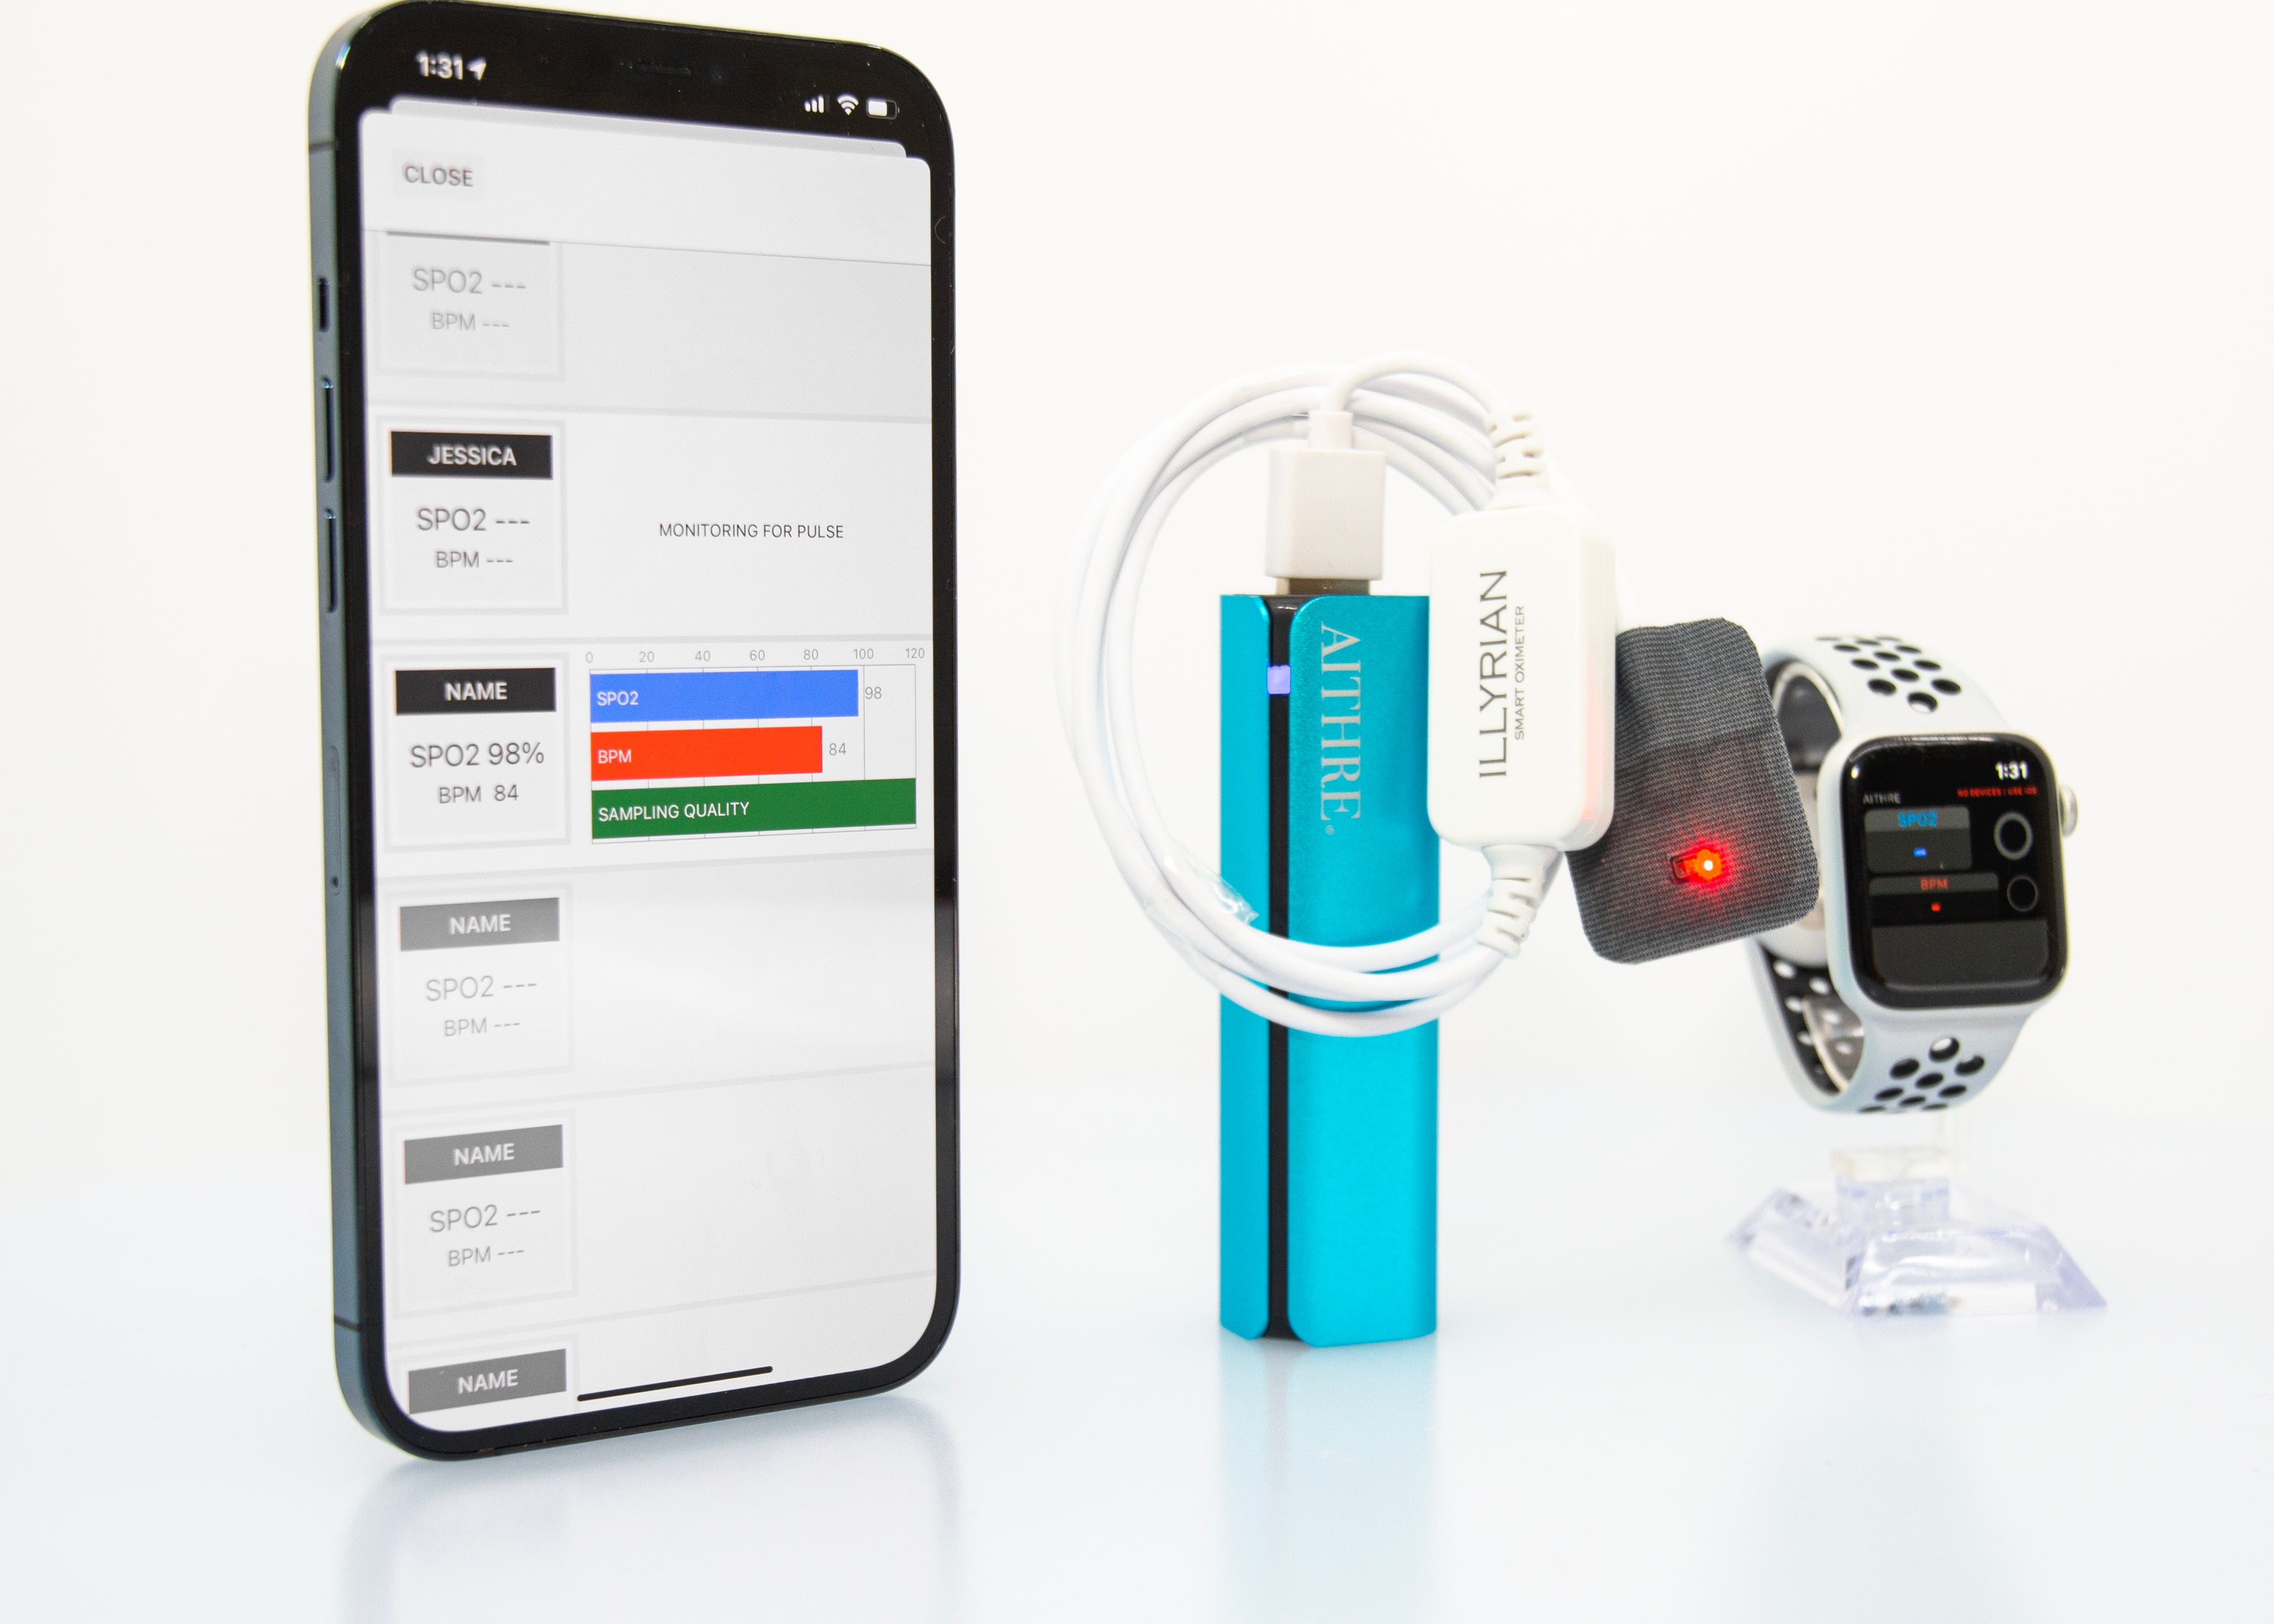 Illyrian Smart Oximeter - With iOS App - White